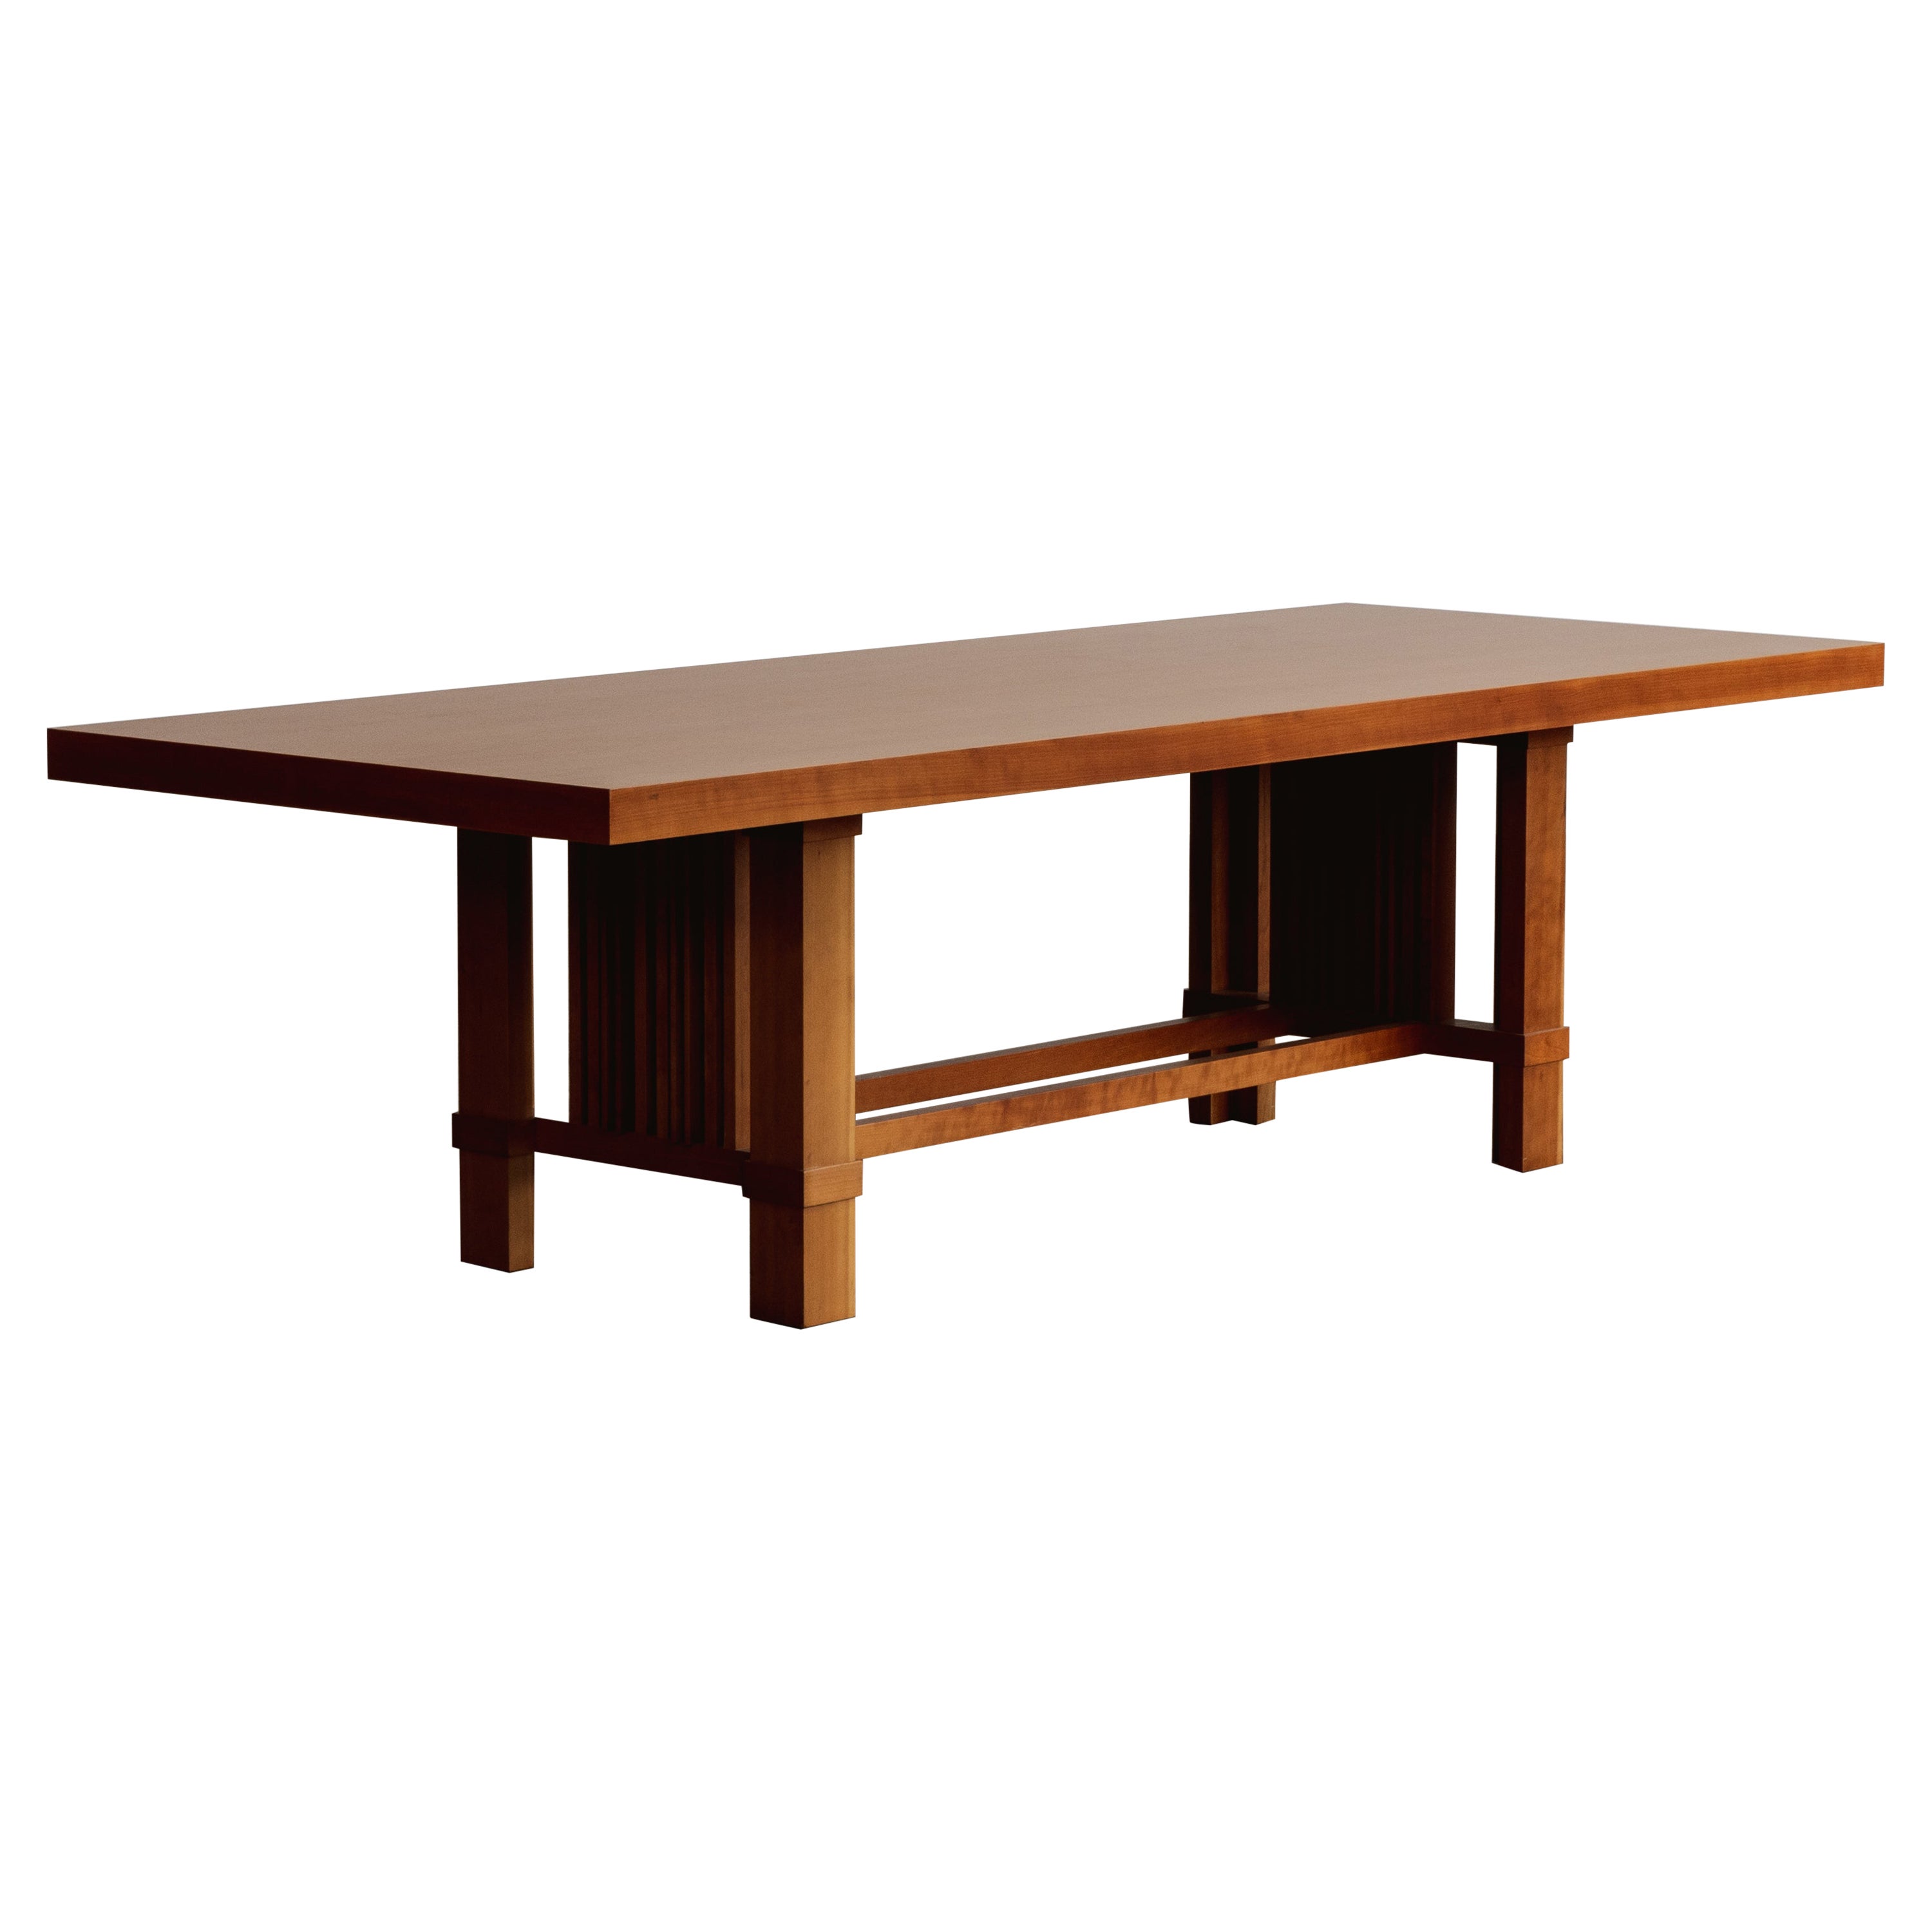 Frank Lloyd Wright “605 Allen” Dining Table for Cassina, 1986